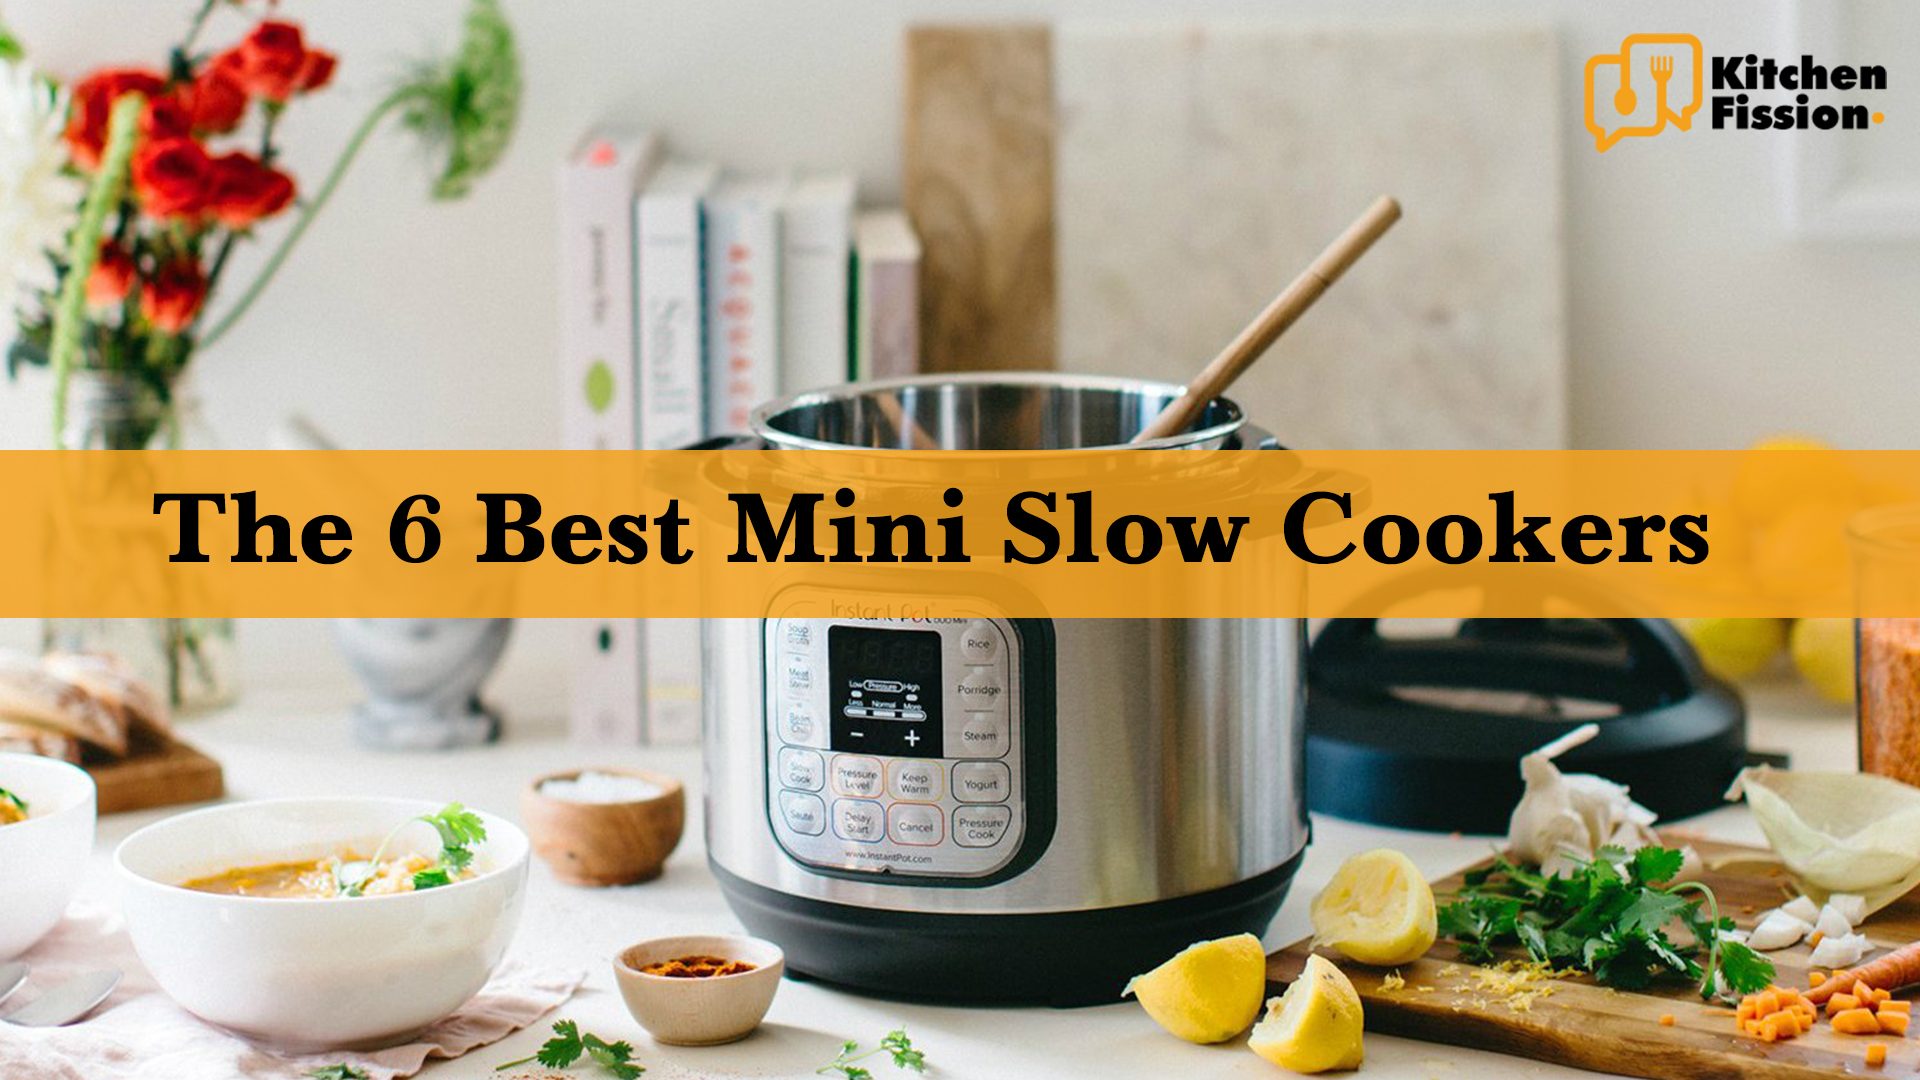 Mini Slow Cookers